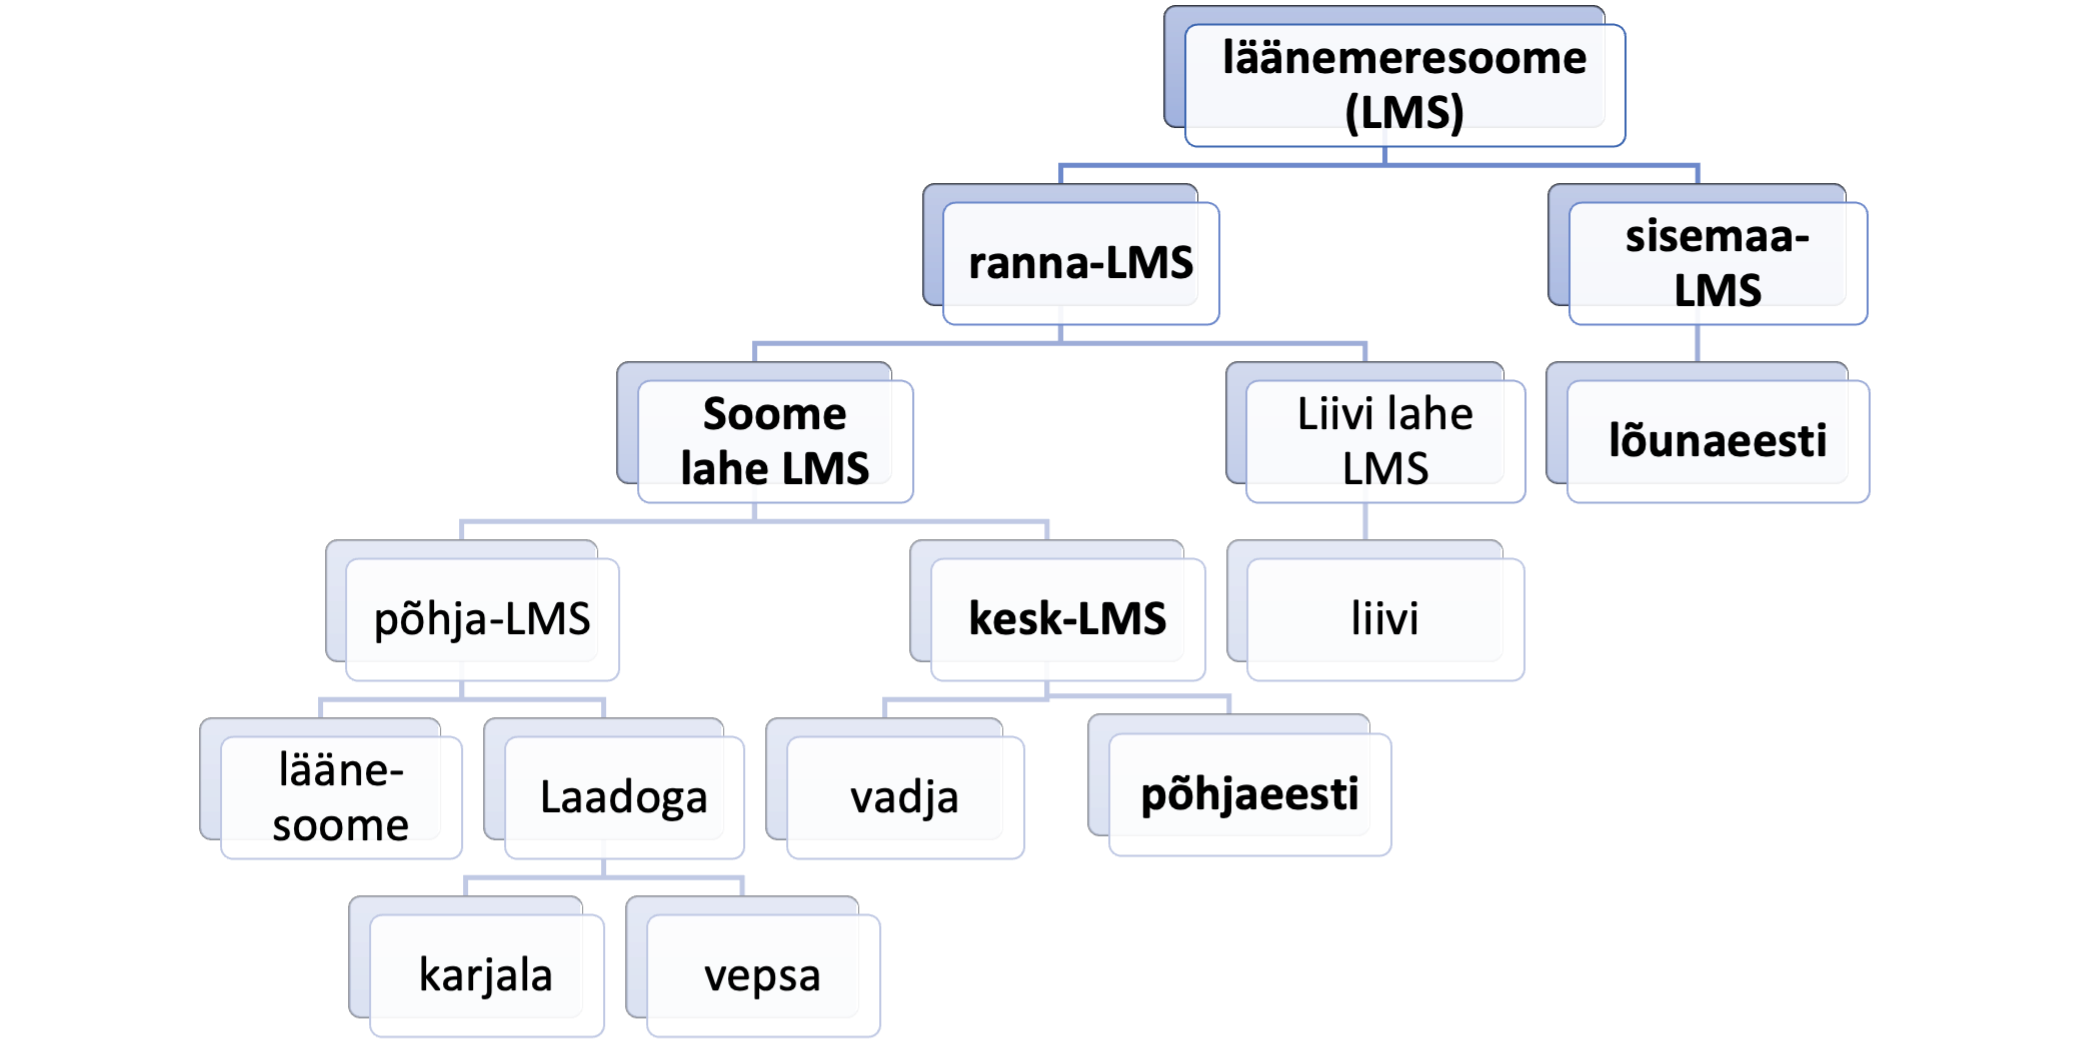 The Finnic language tree.